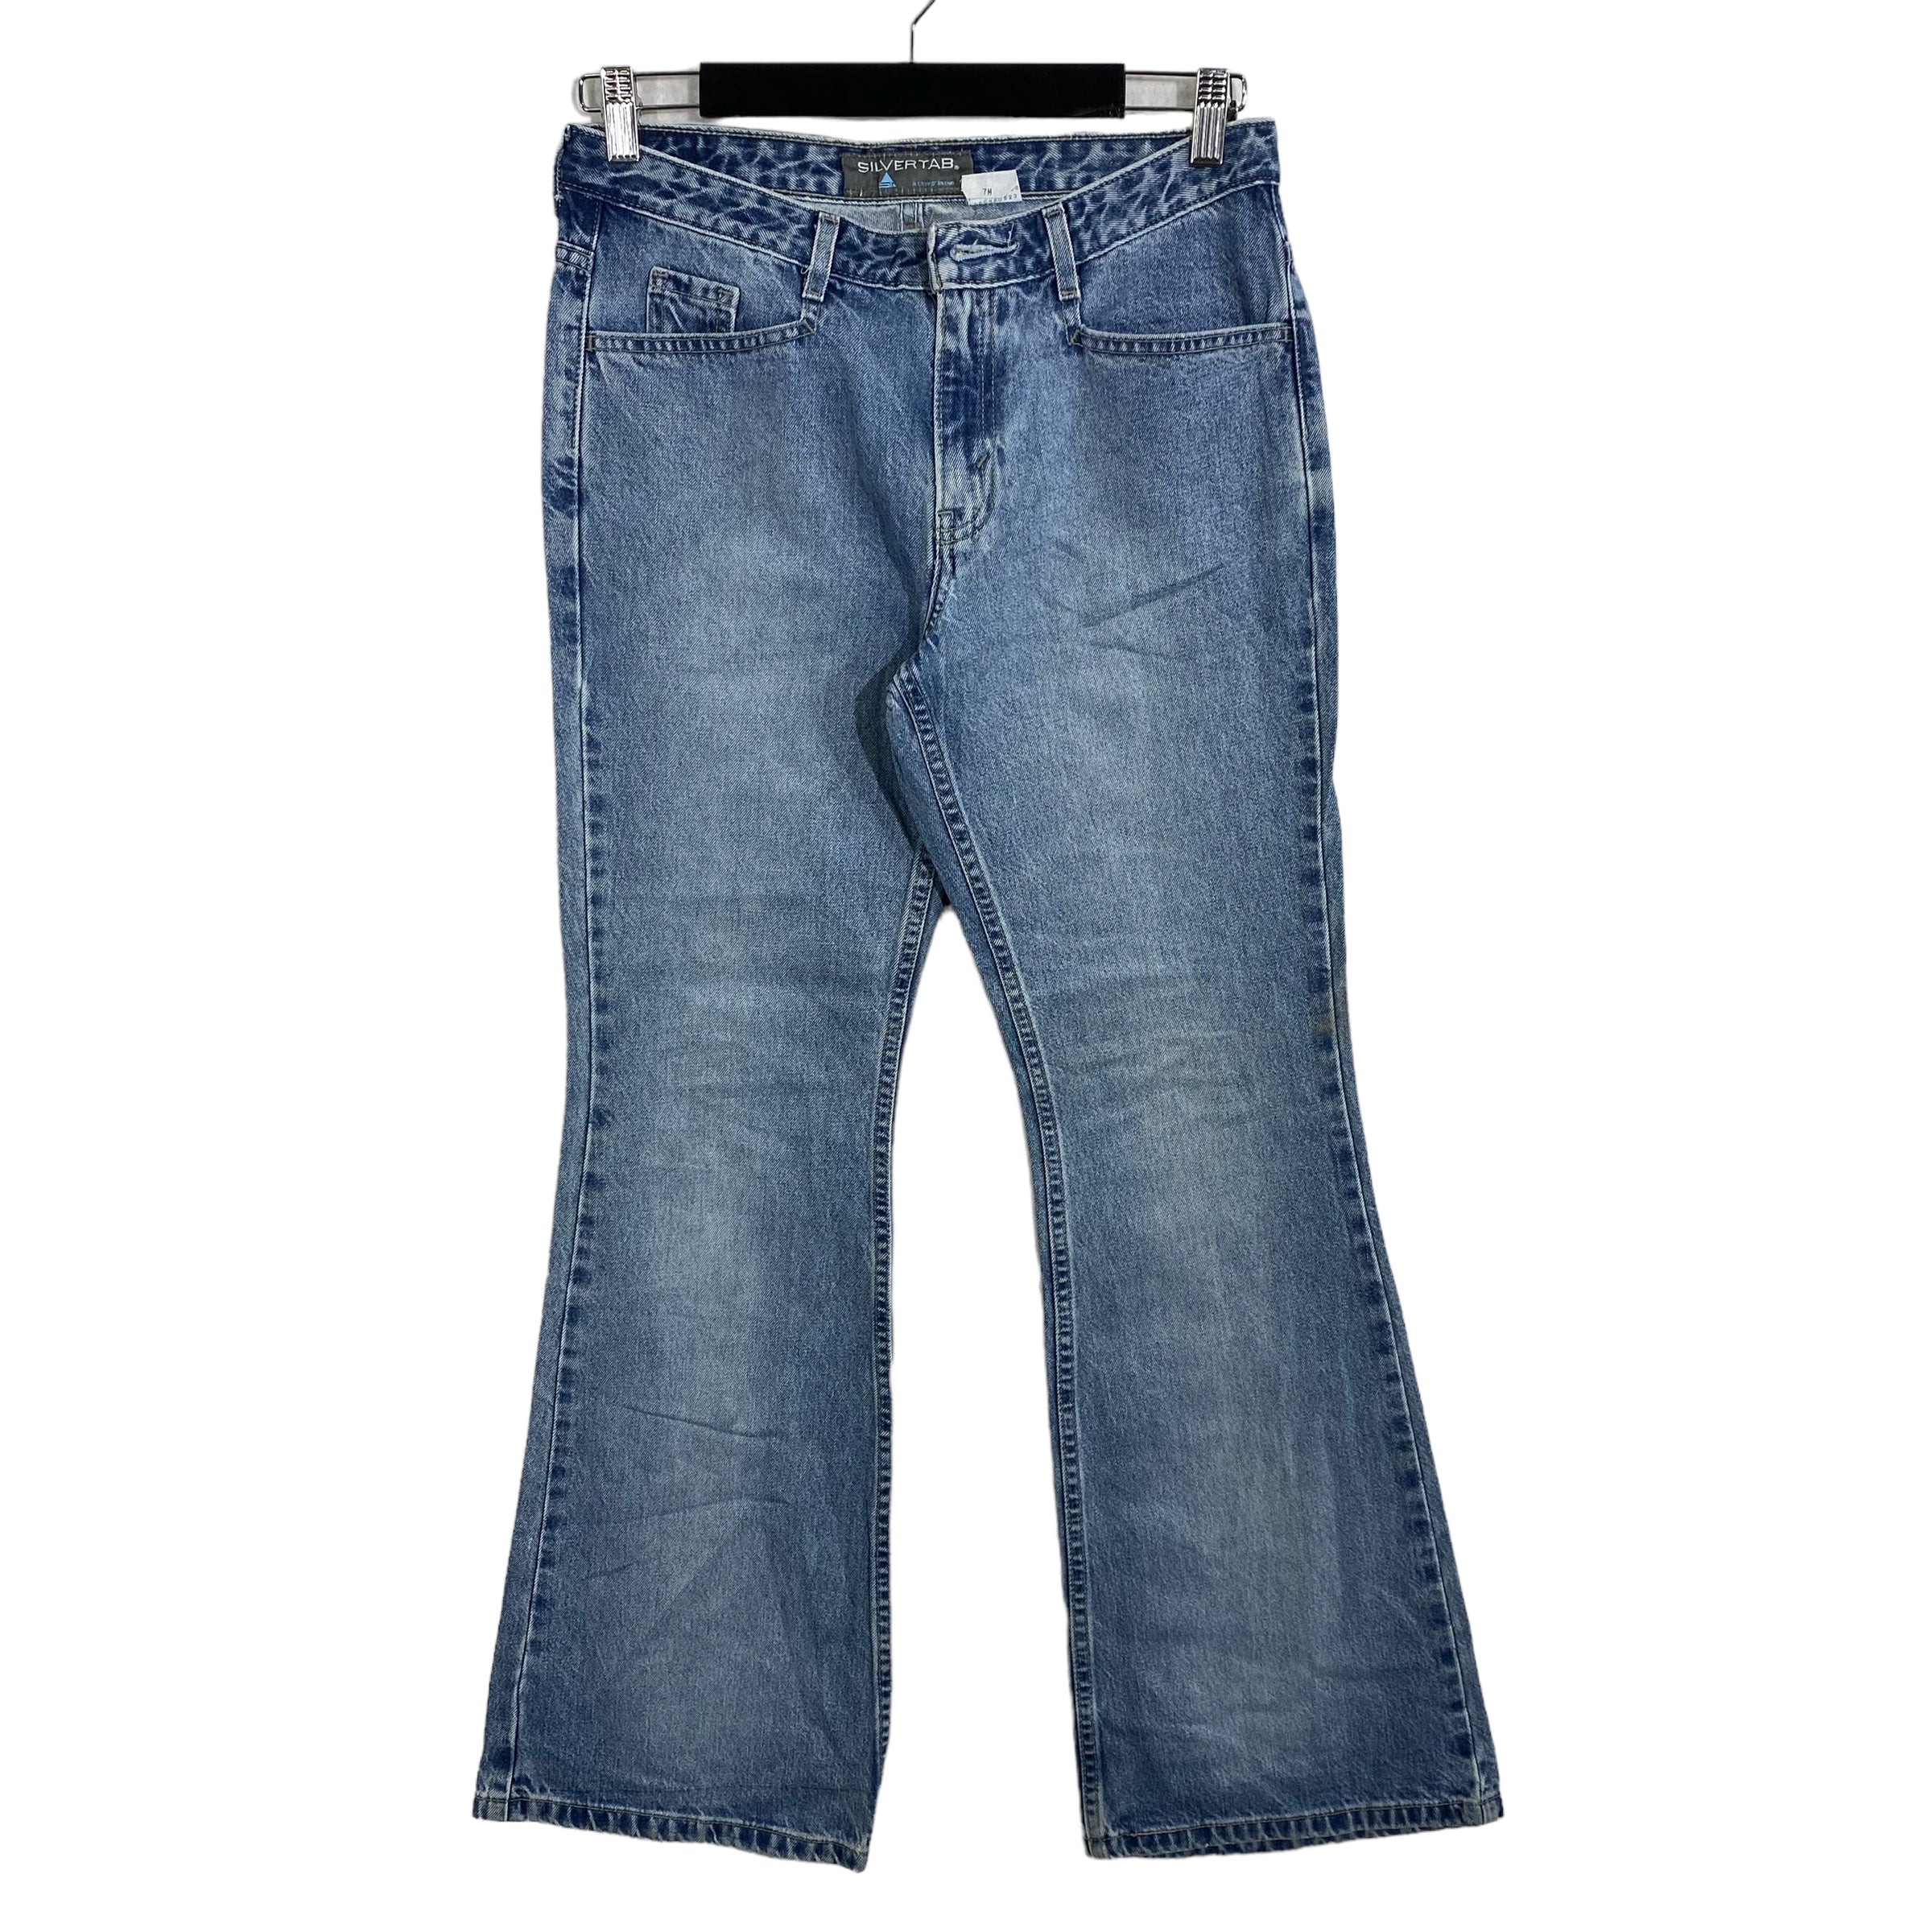 Vintage Levi's Silvertab Denim Jeans